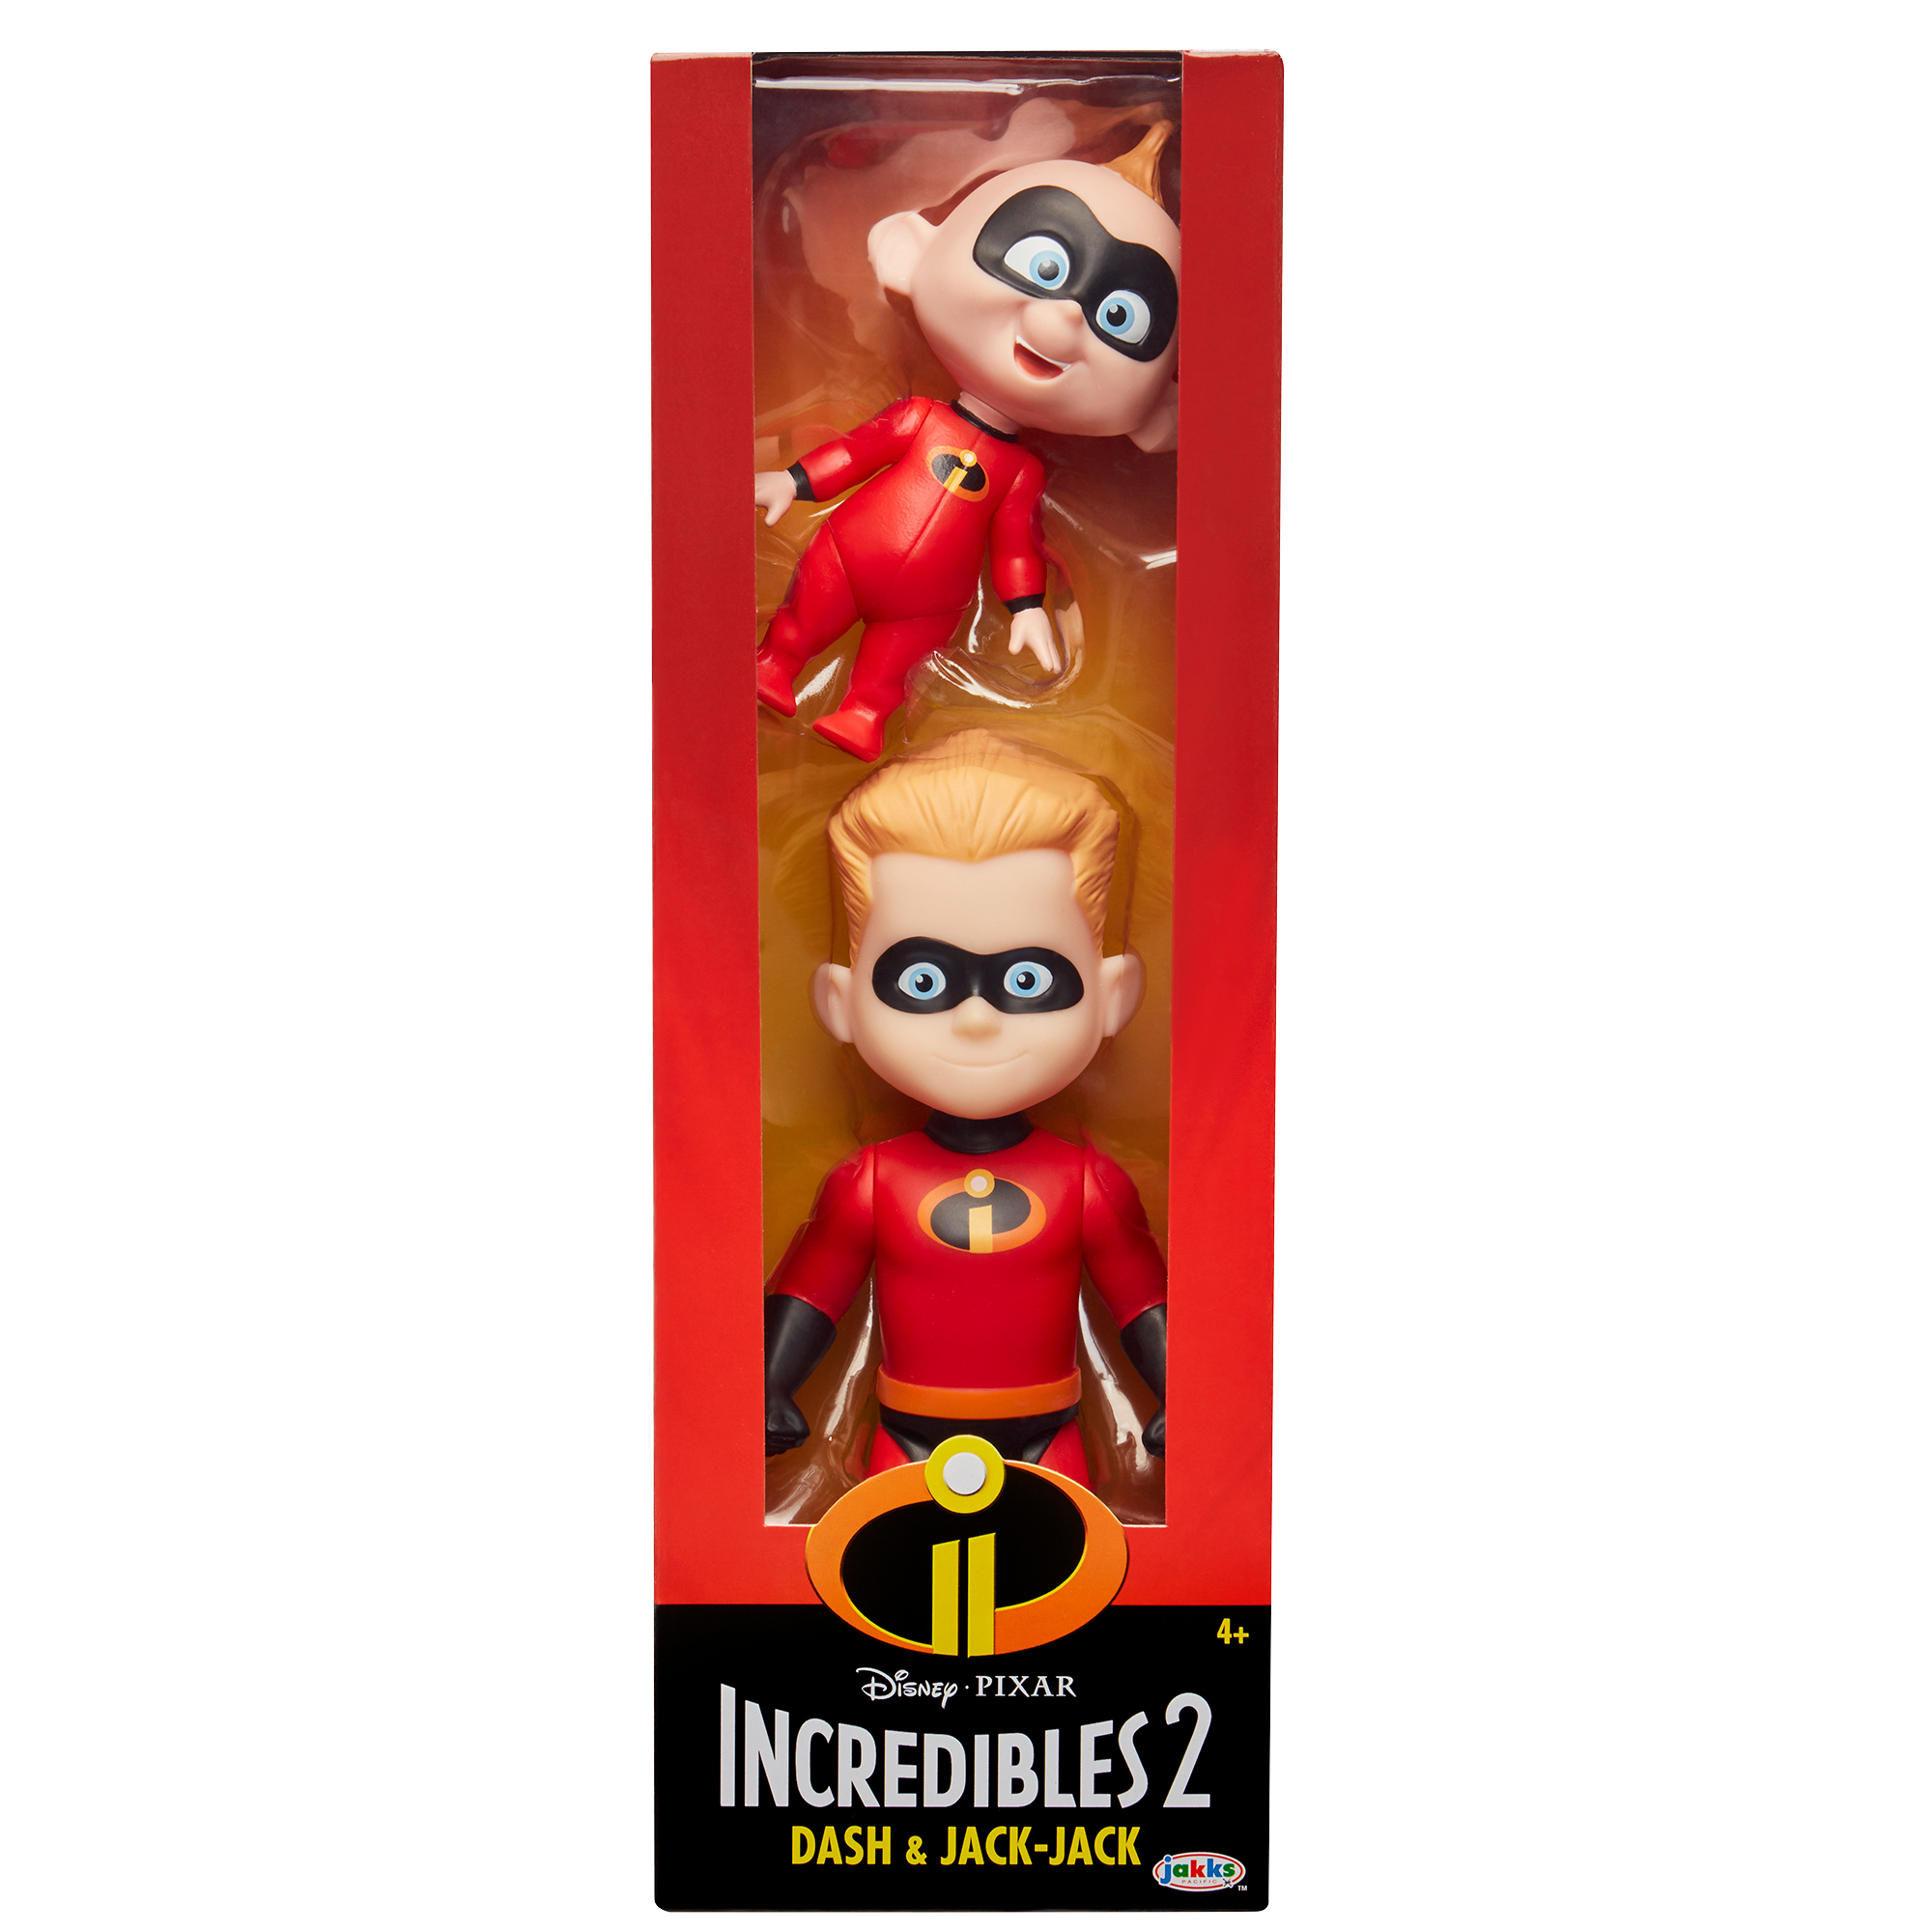 Incredibles 2 champion series action figures - dash & jack-jack - image 4 of 6